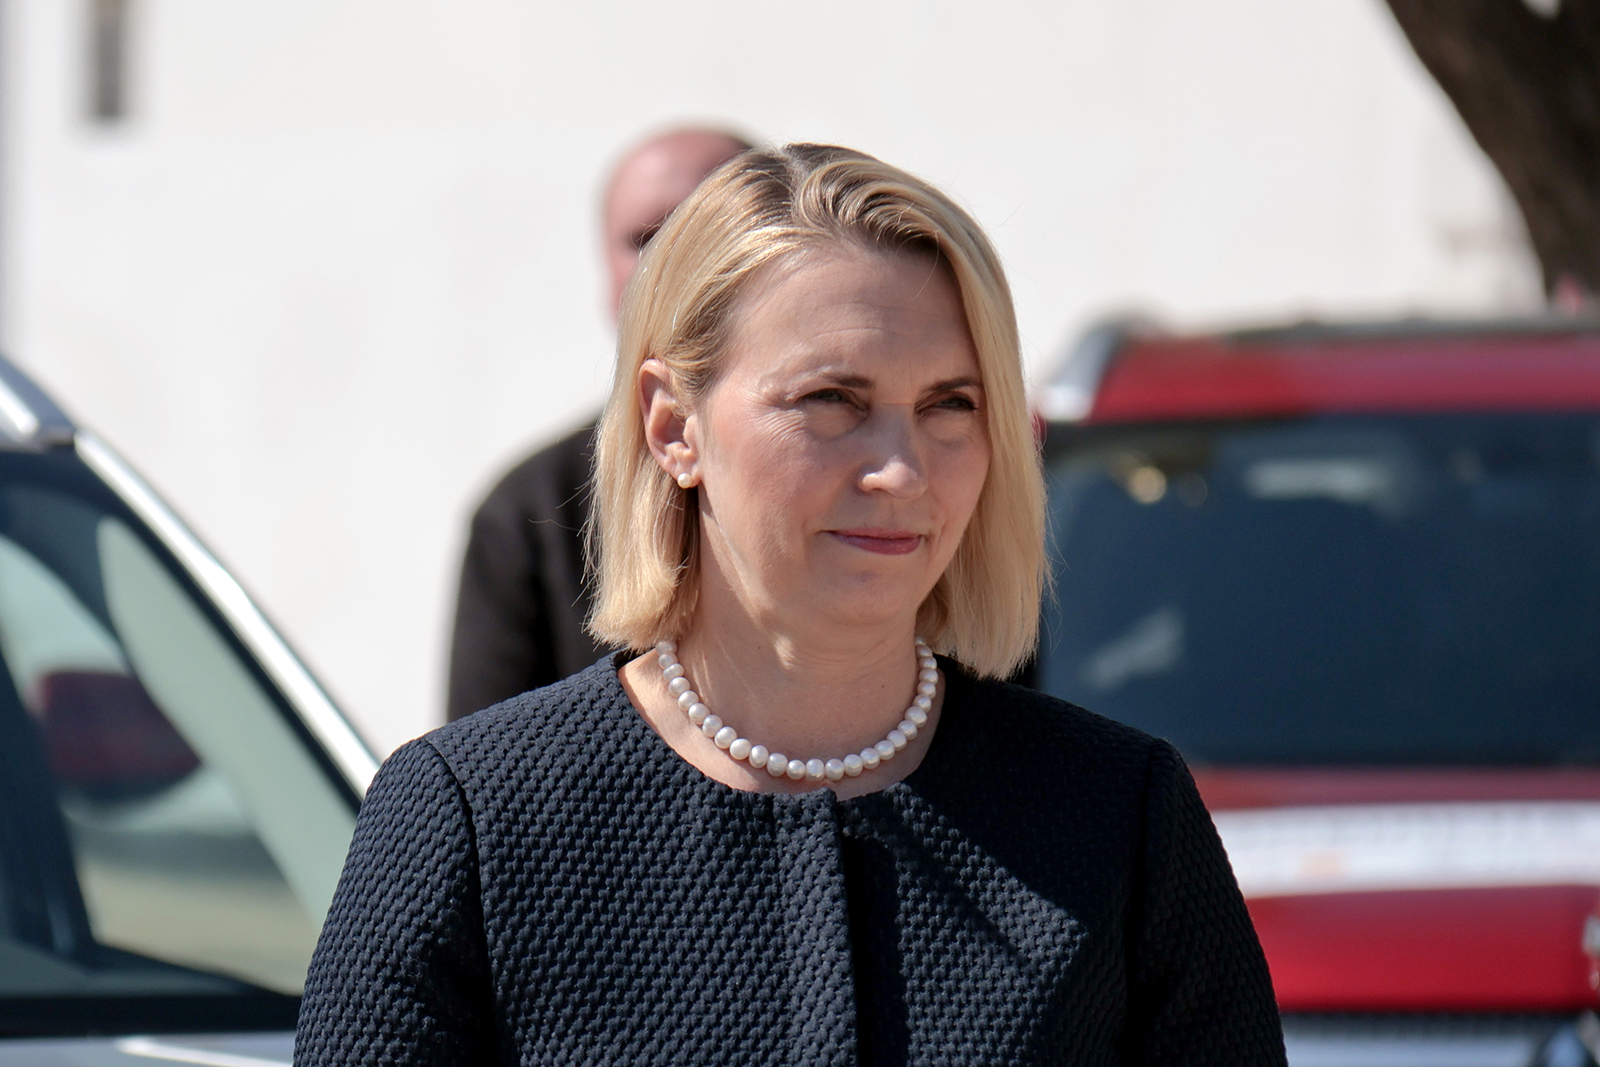 Bridget A. Brink attends a ceremony in Kyiv, Ukraine on April 25.